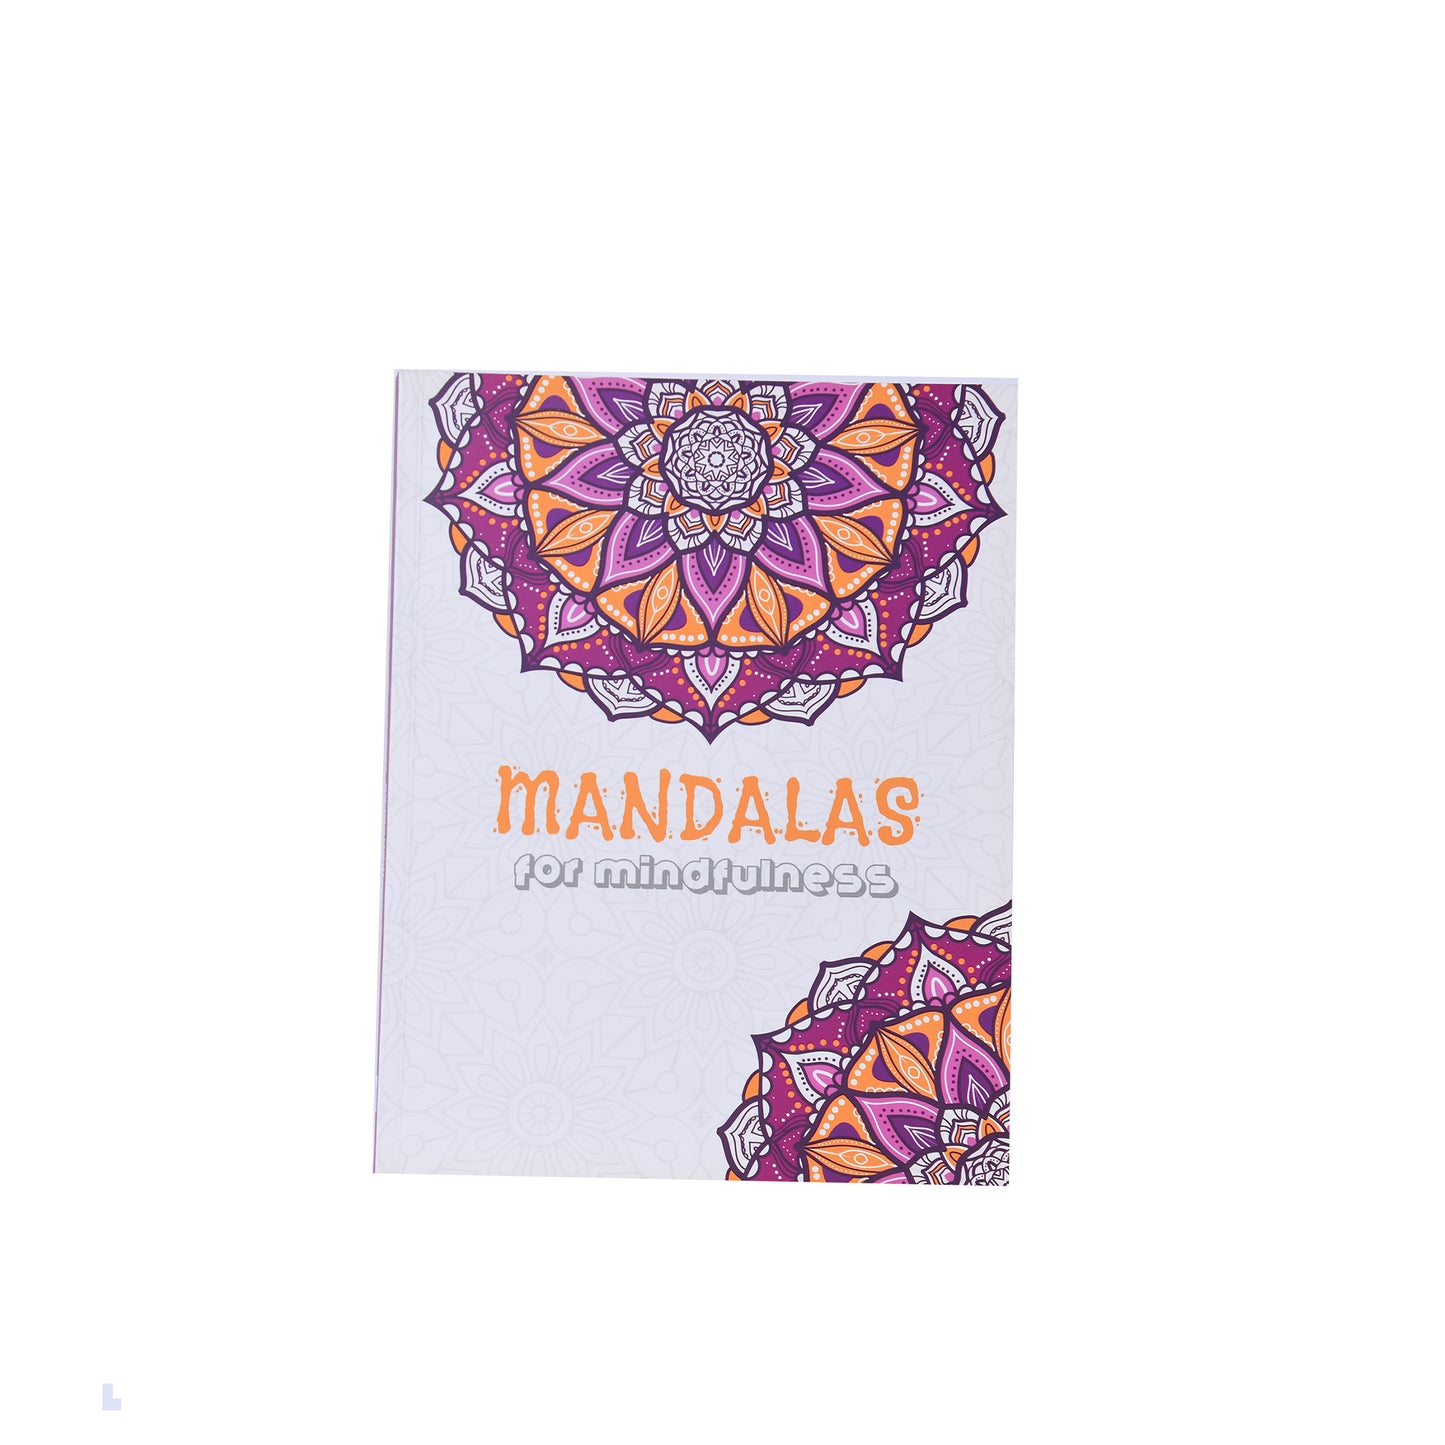 Mandalas For Mindfulness